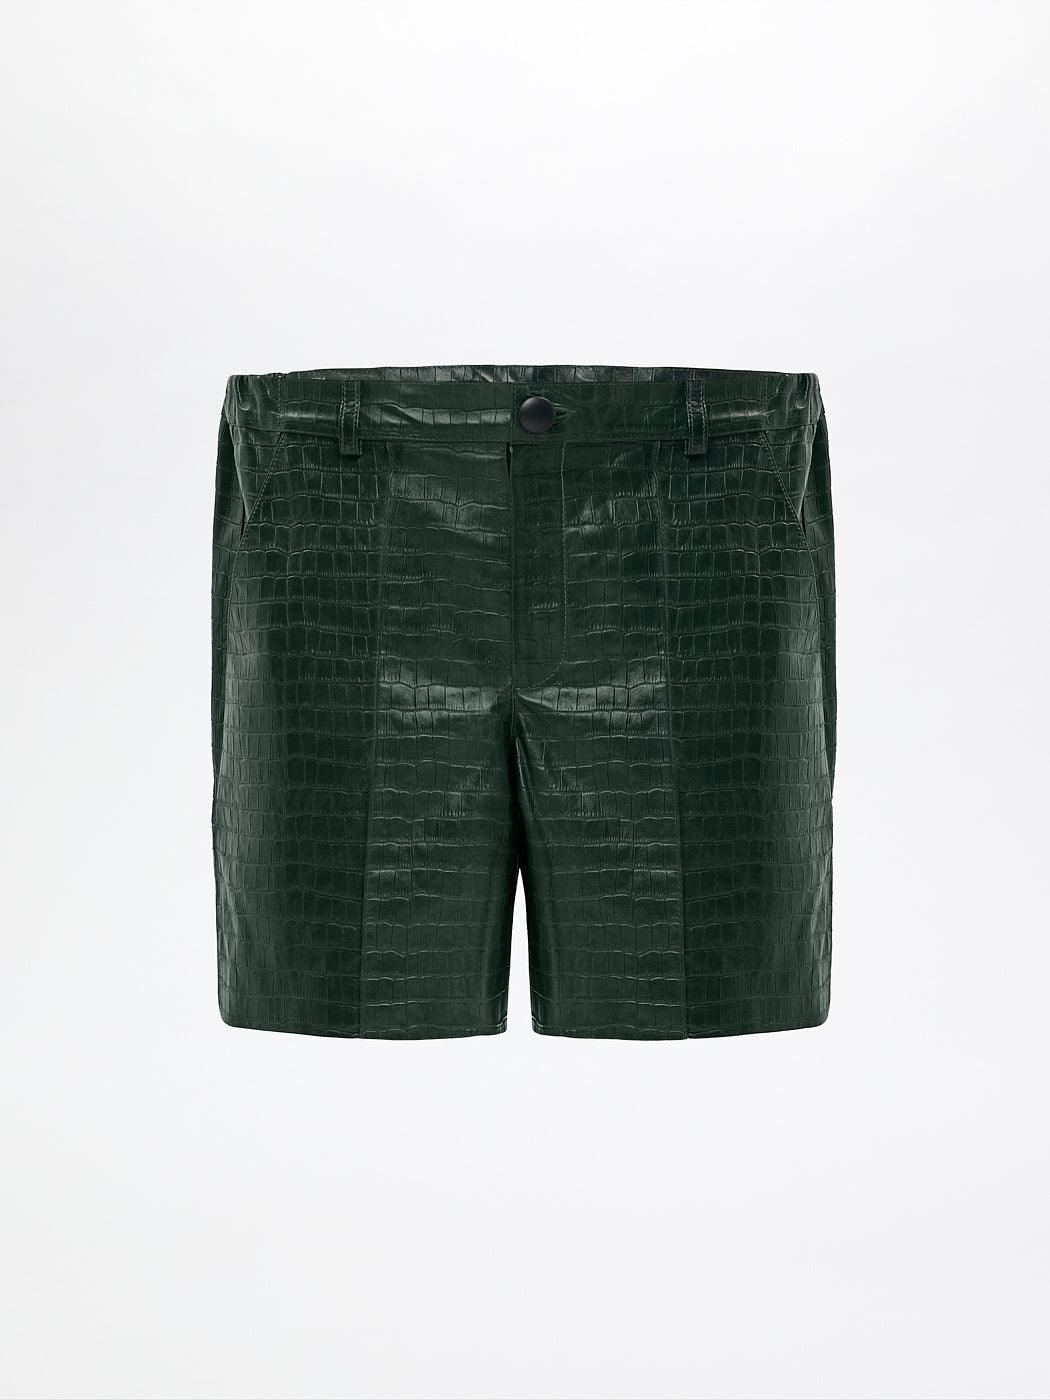 ﻿Croc-Embossed Leather Short For Men-4